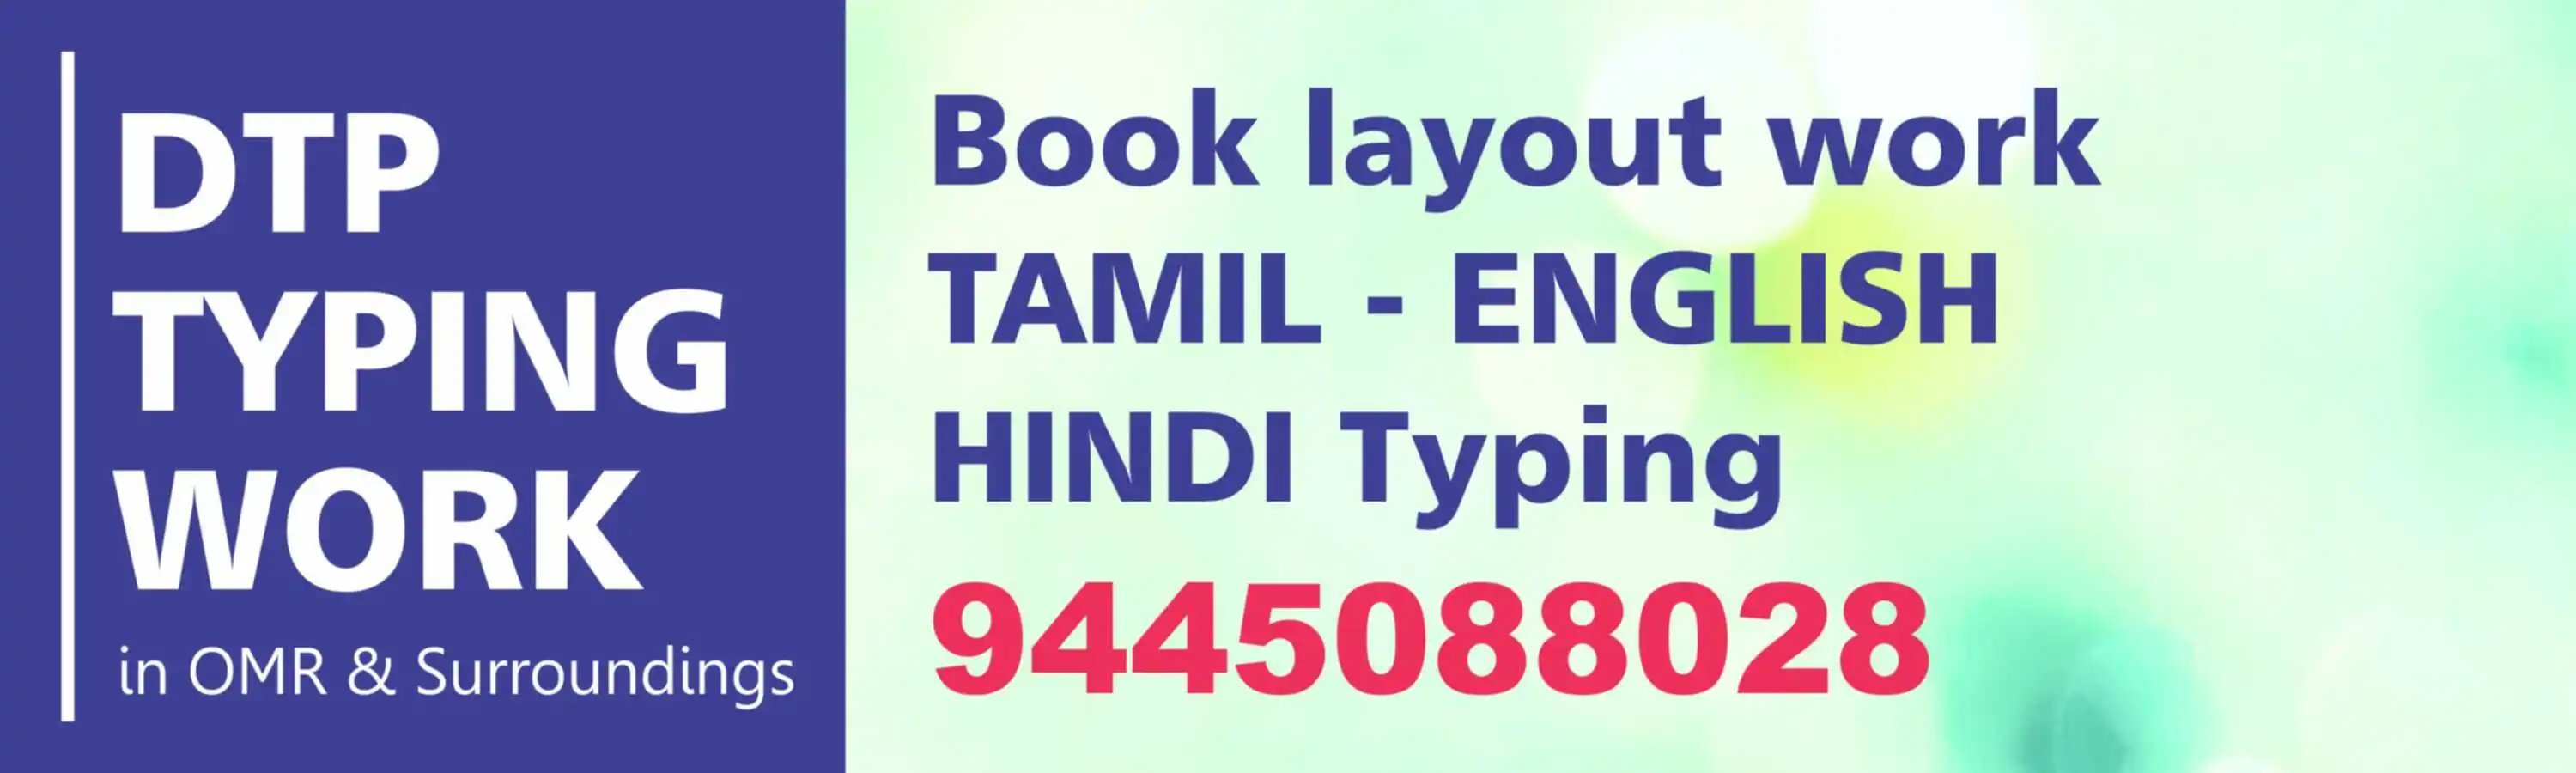 Tamil and English DTP Typing Person available in OMR Road, Perungudi, Karapakkam, Thoraipakkam